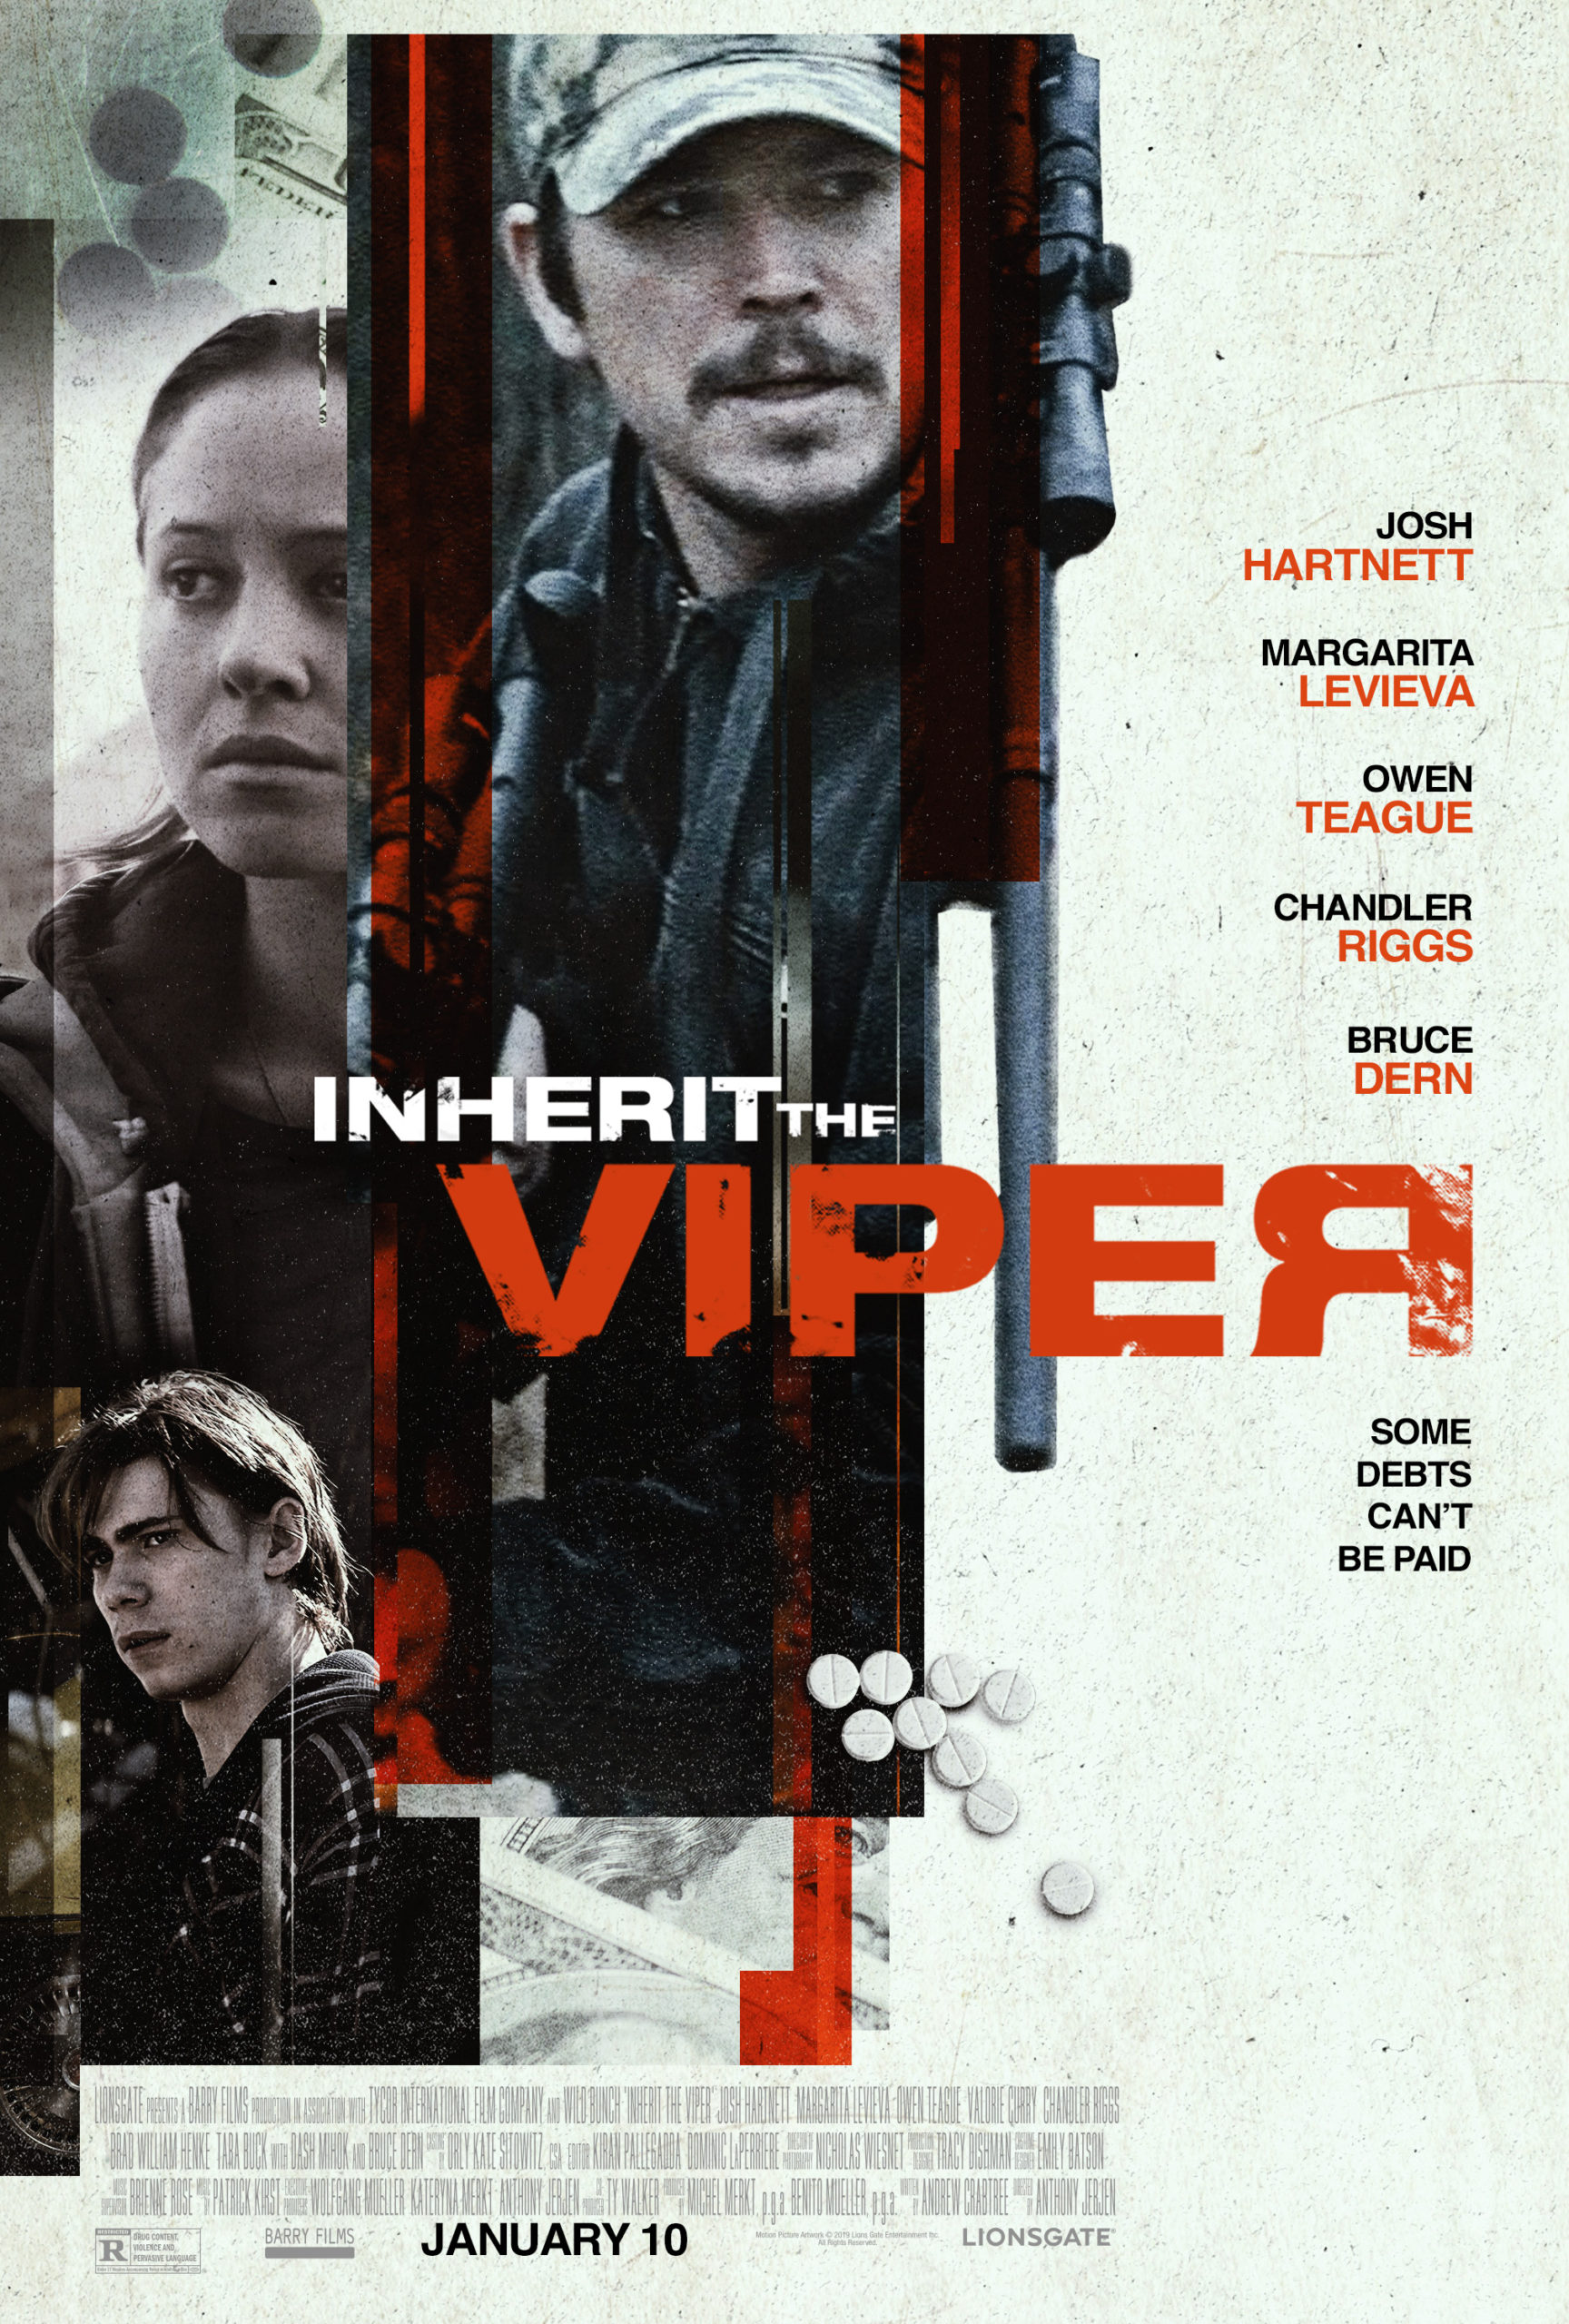 "Inherit the Viper"